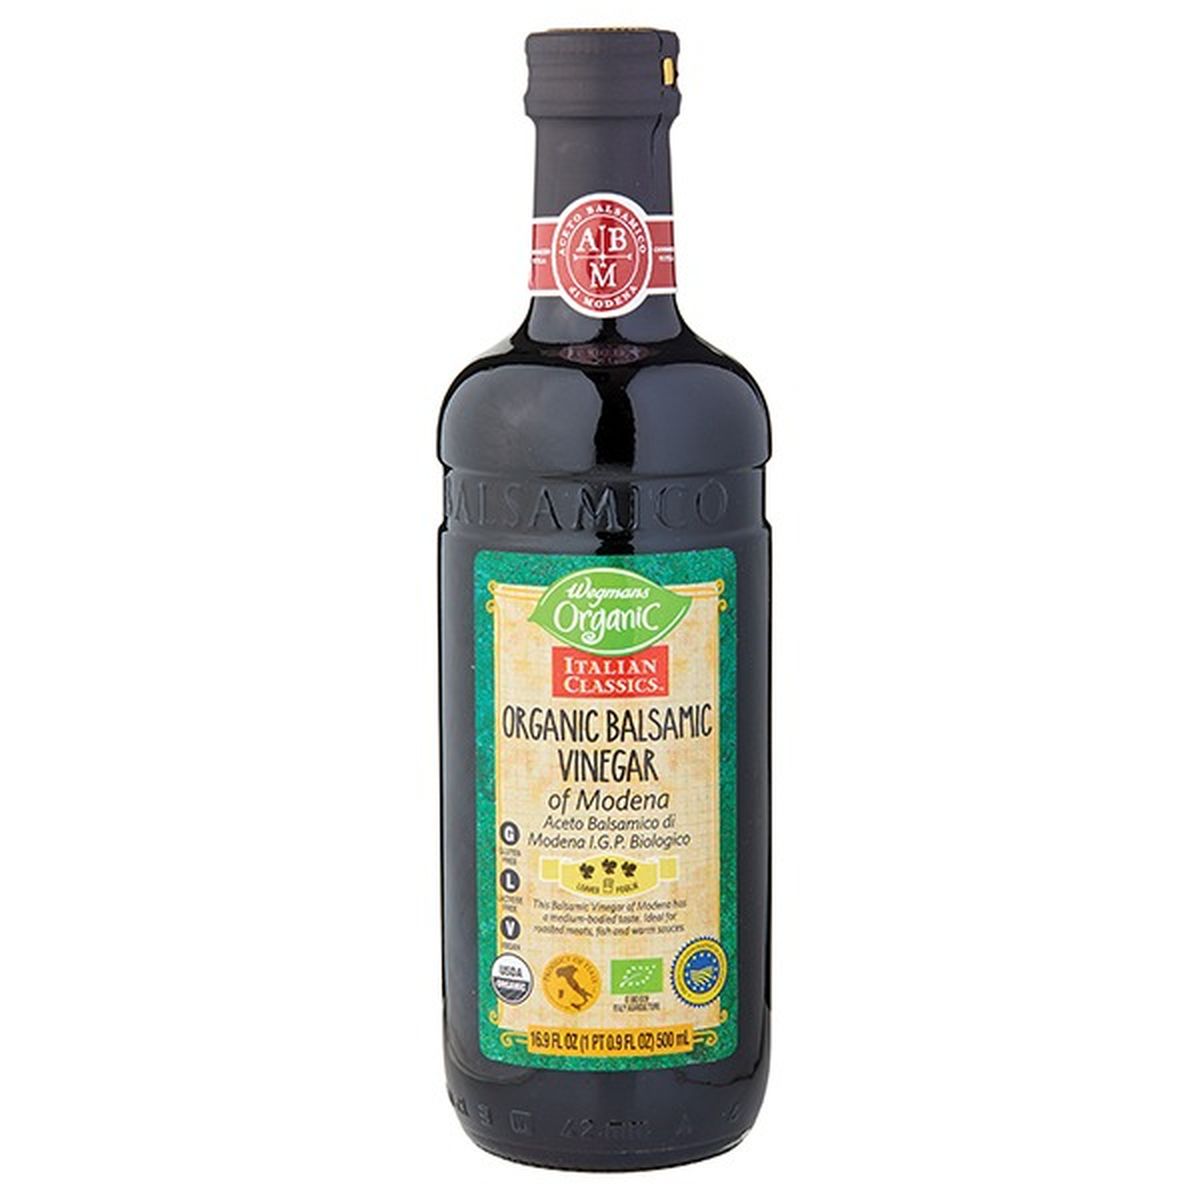 Calories in Wegmans Italian Classics Organic Balsamic Vinegar of Modena